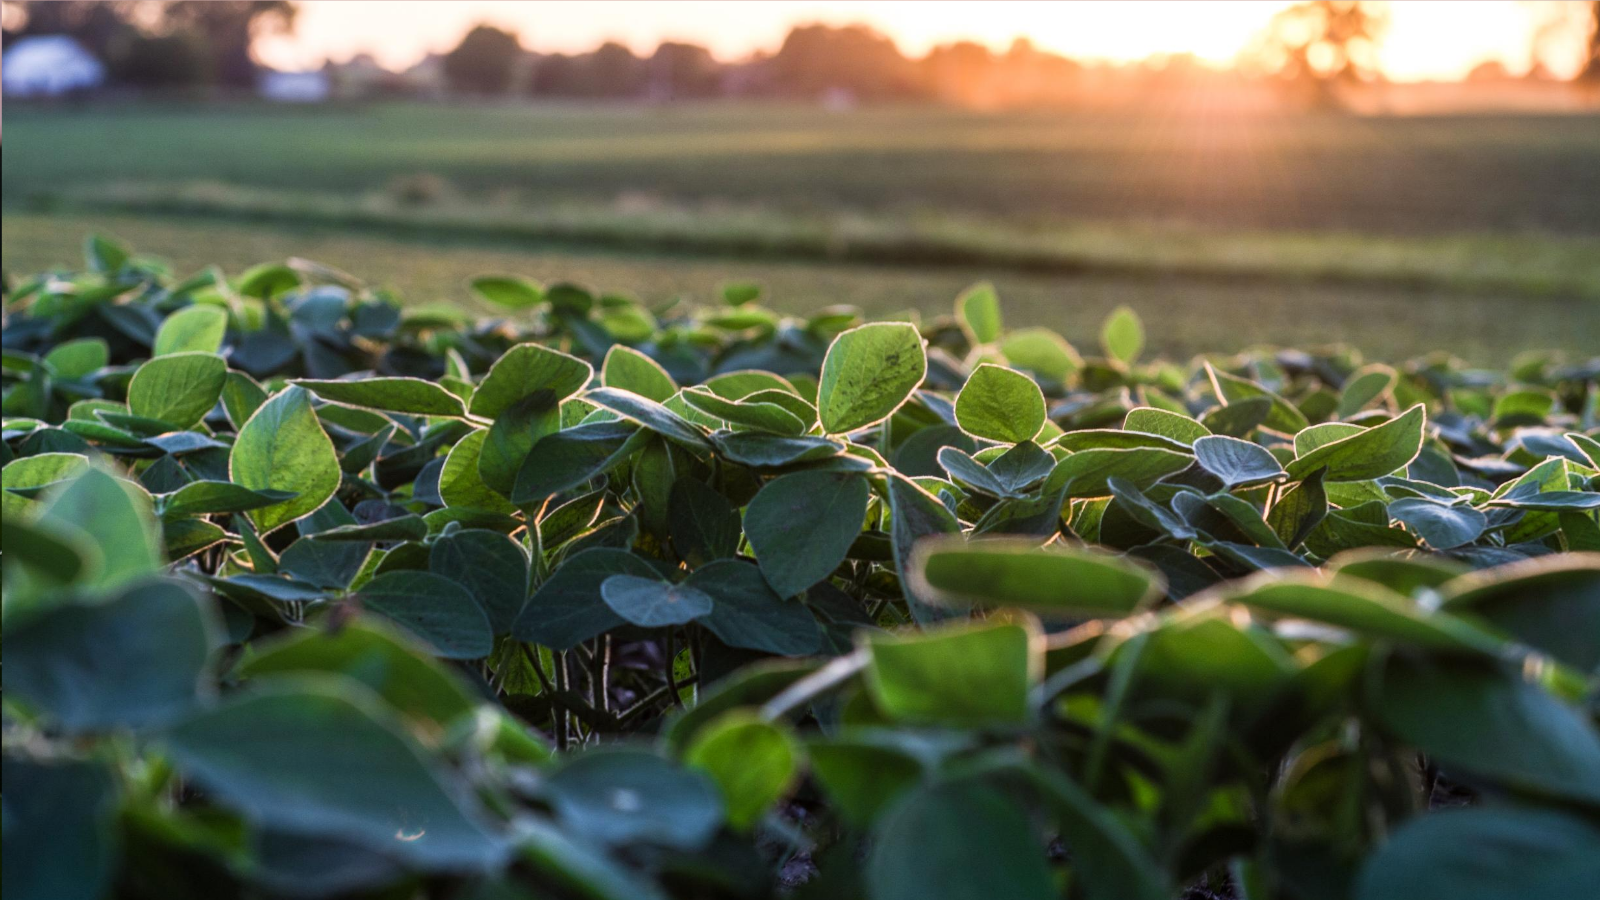 Sunrise over a soybean field.